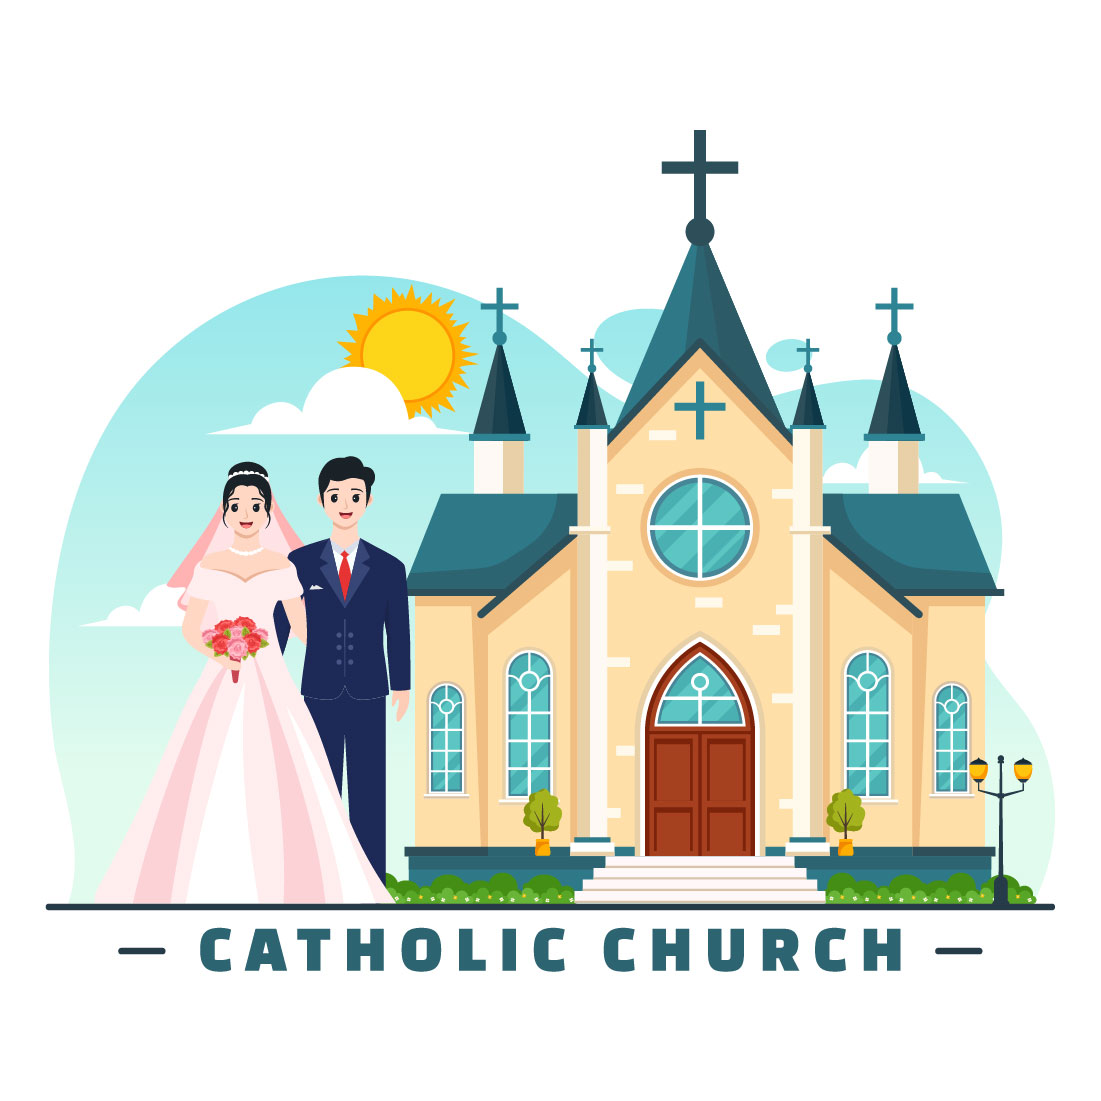 11 Cathedral Catholic Church Illustration cover image.